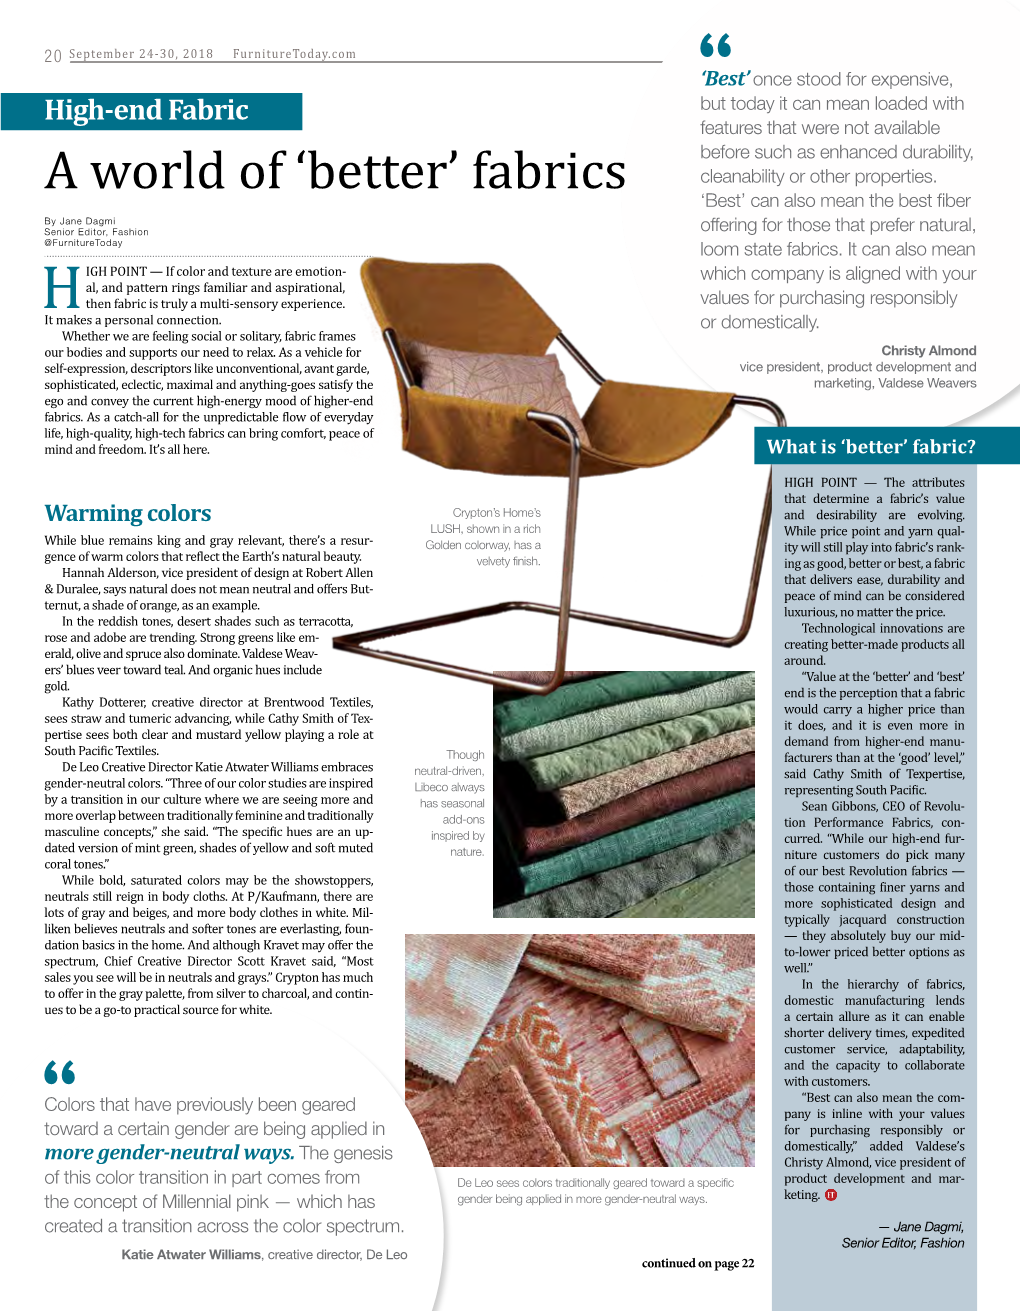 High-End Fabric: a World of 'Better'